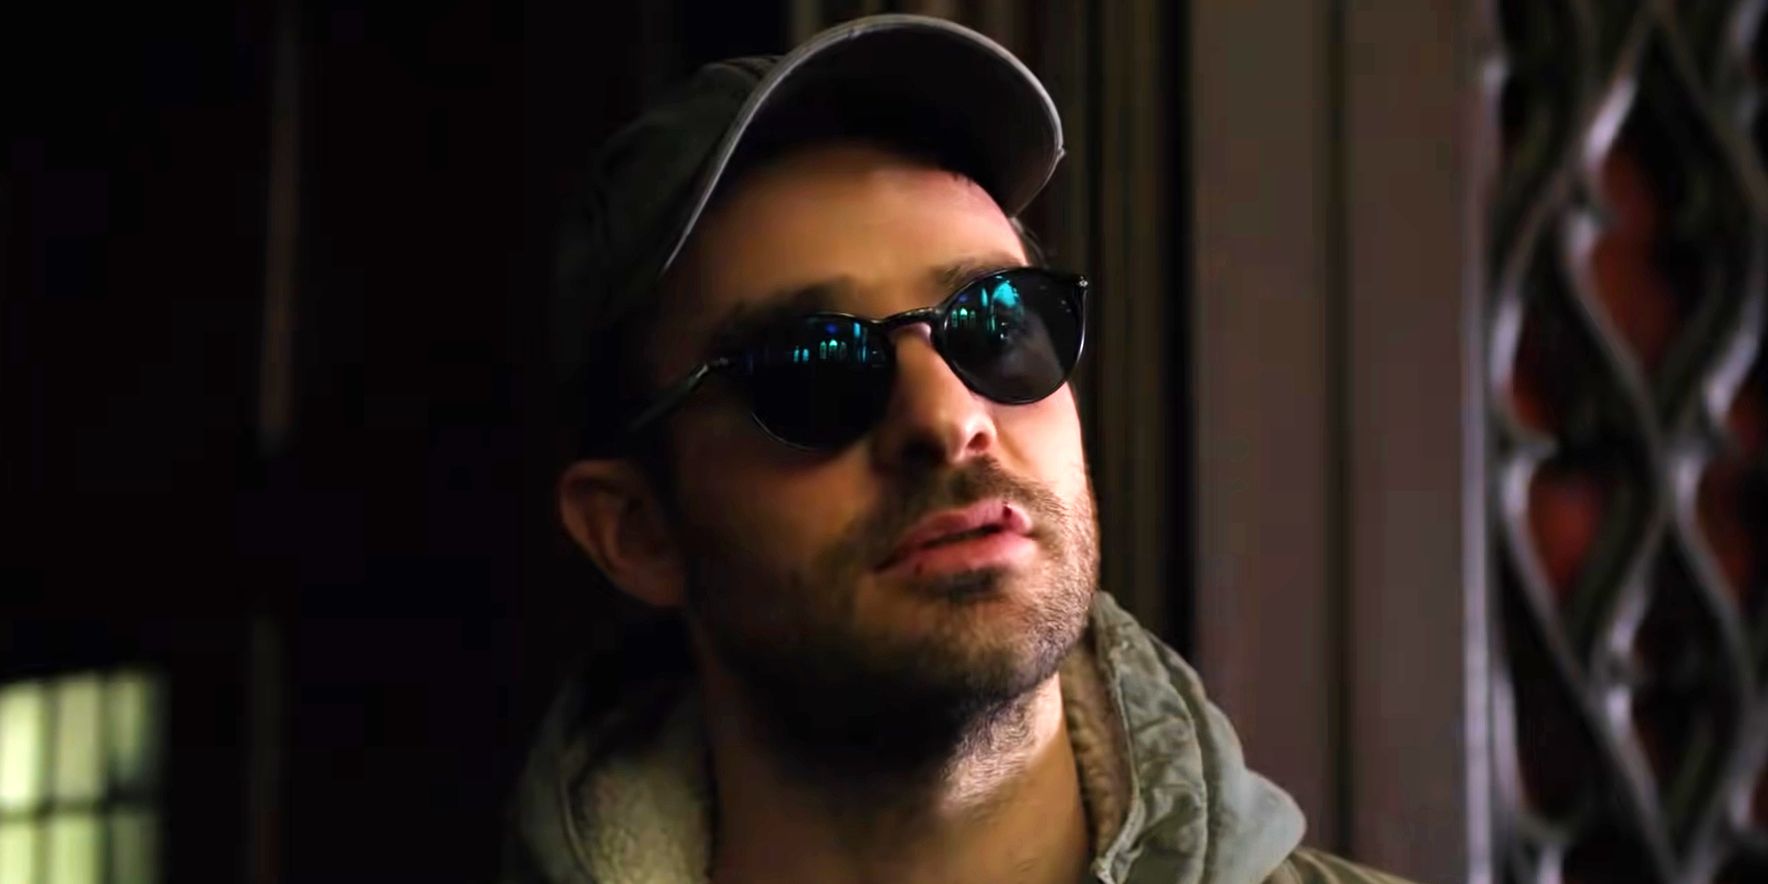 Matt Murdock wearing a cap and talking to someone off-camera in Daredevil.